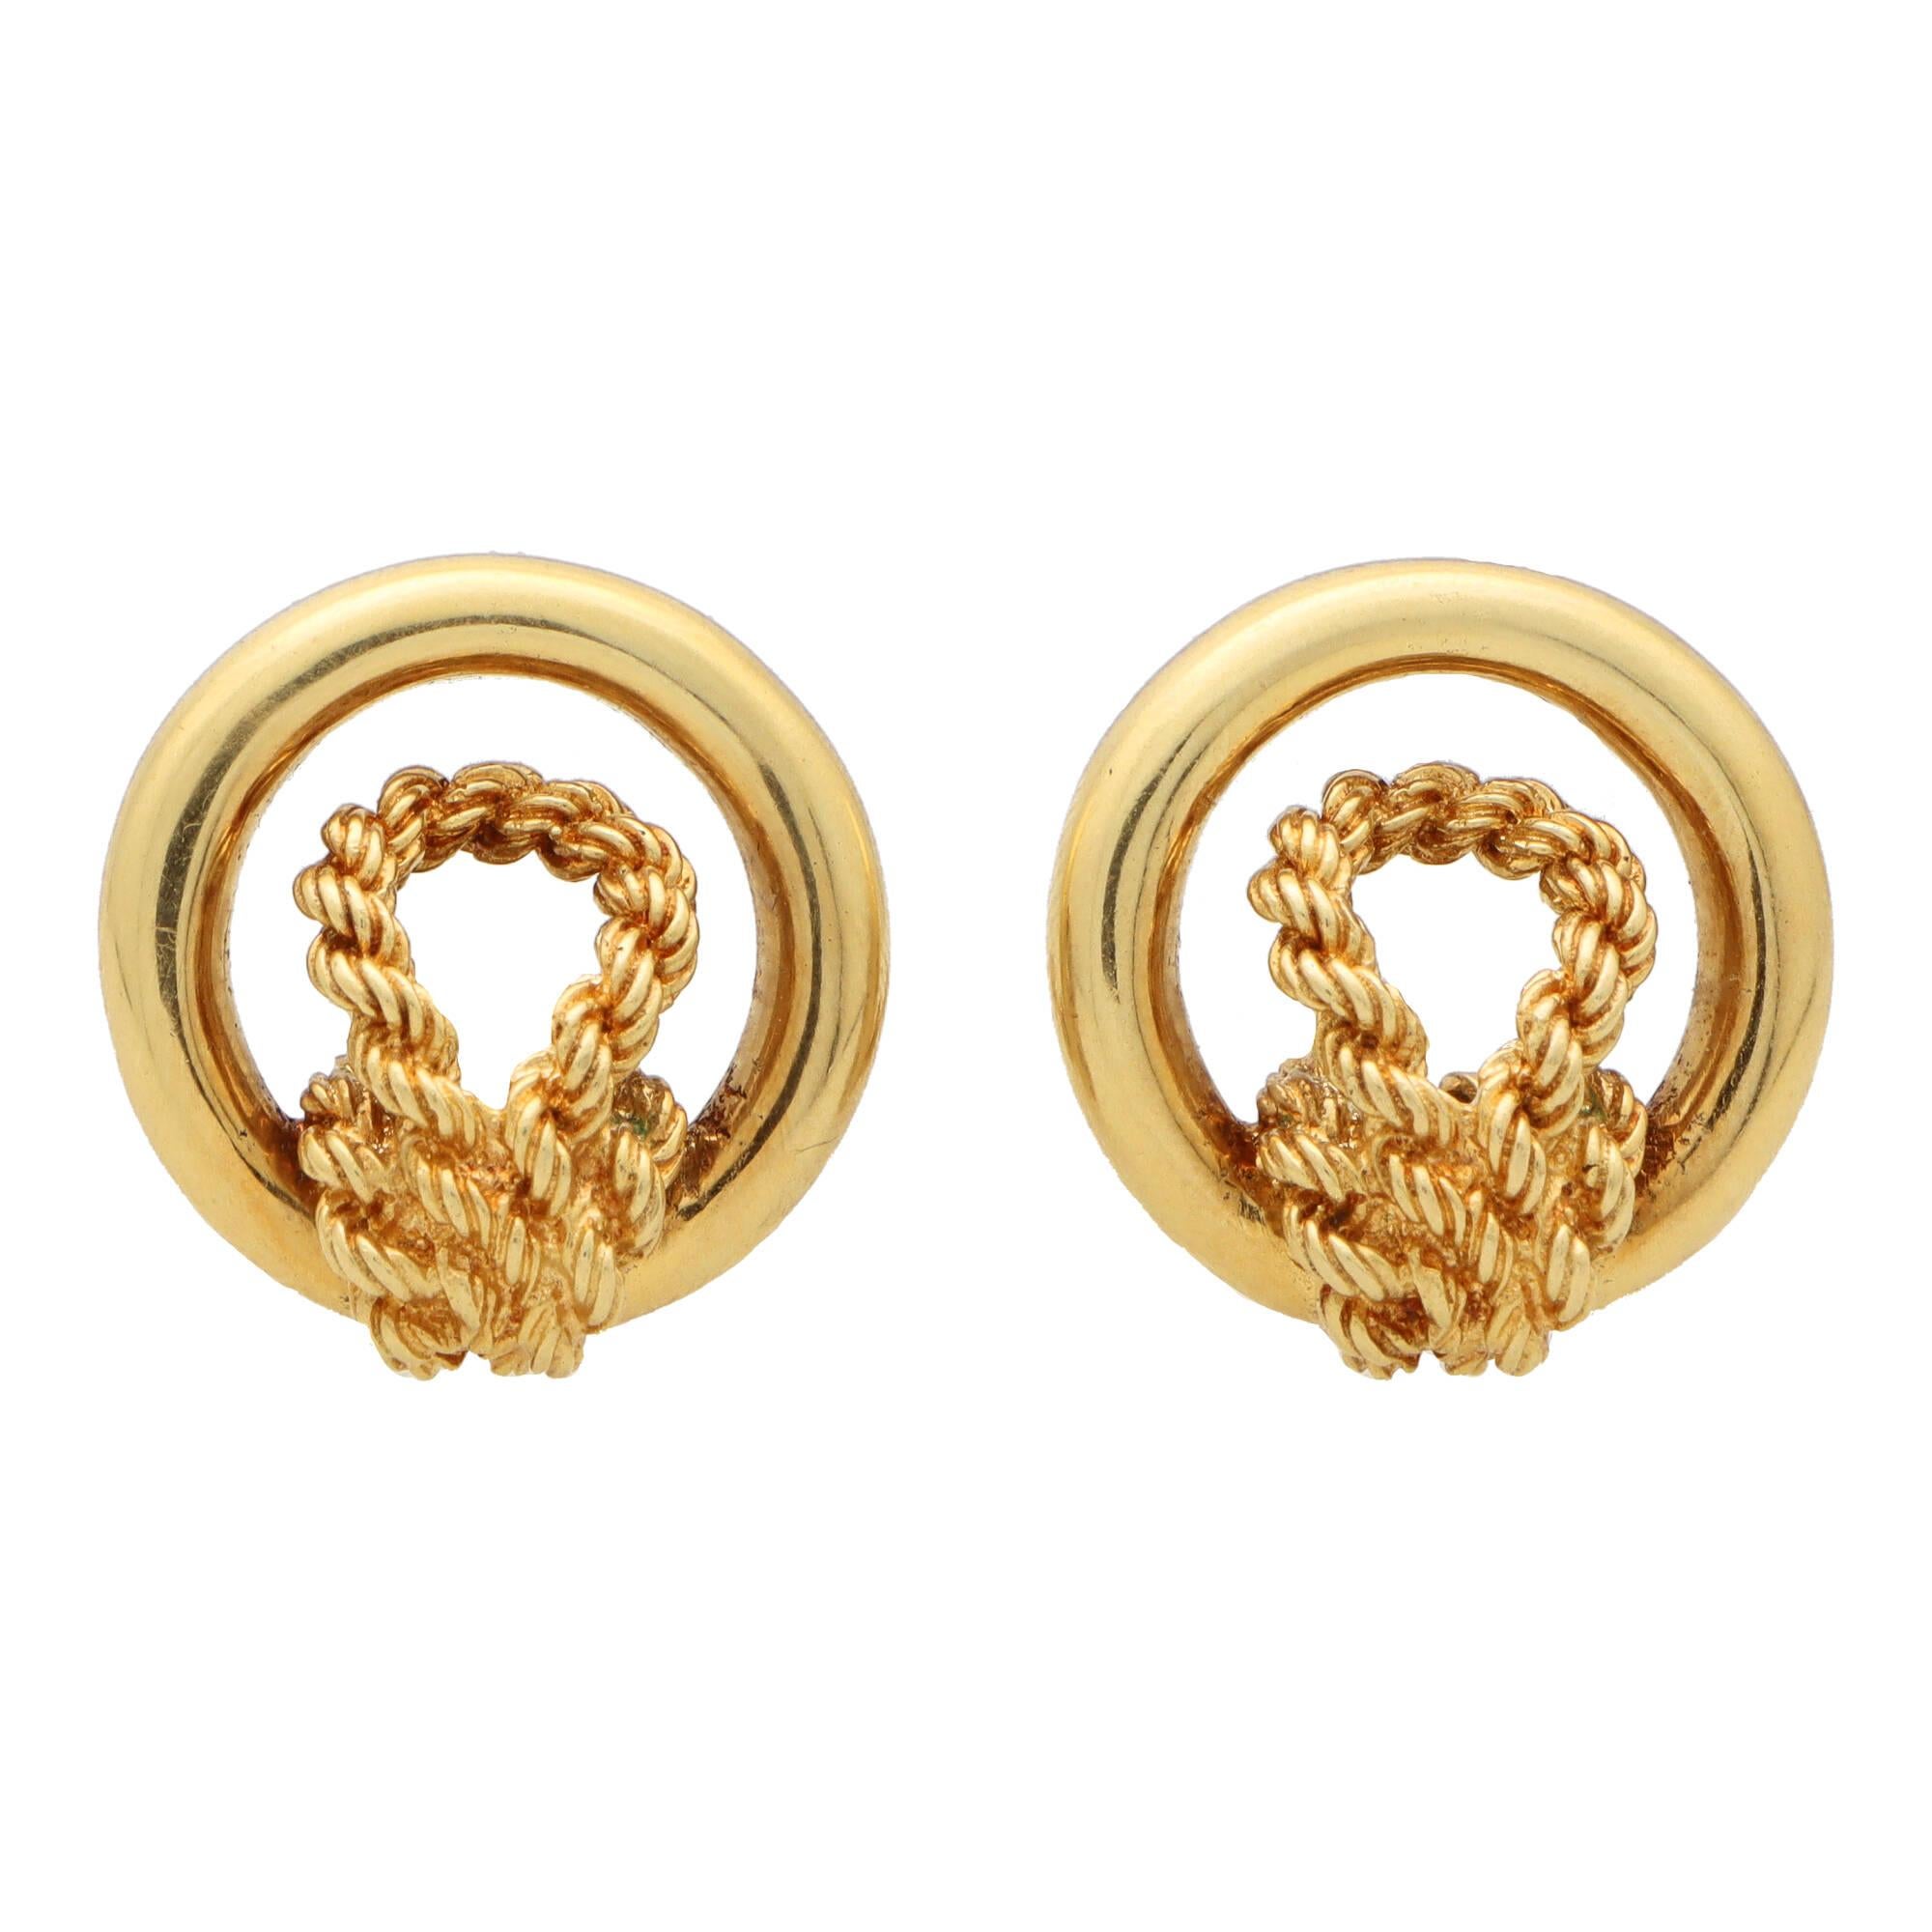 Retro  Vintage Hermès Paris Circular Knot Earrings Set in 18k Yellow Gold